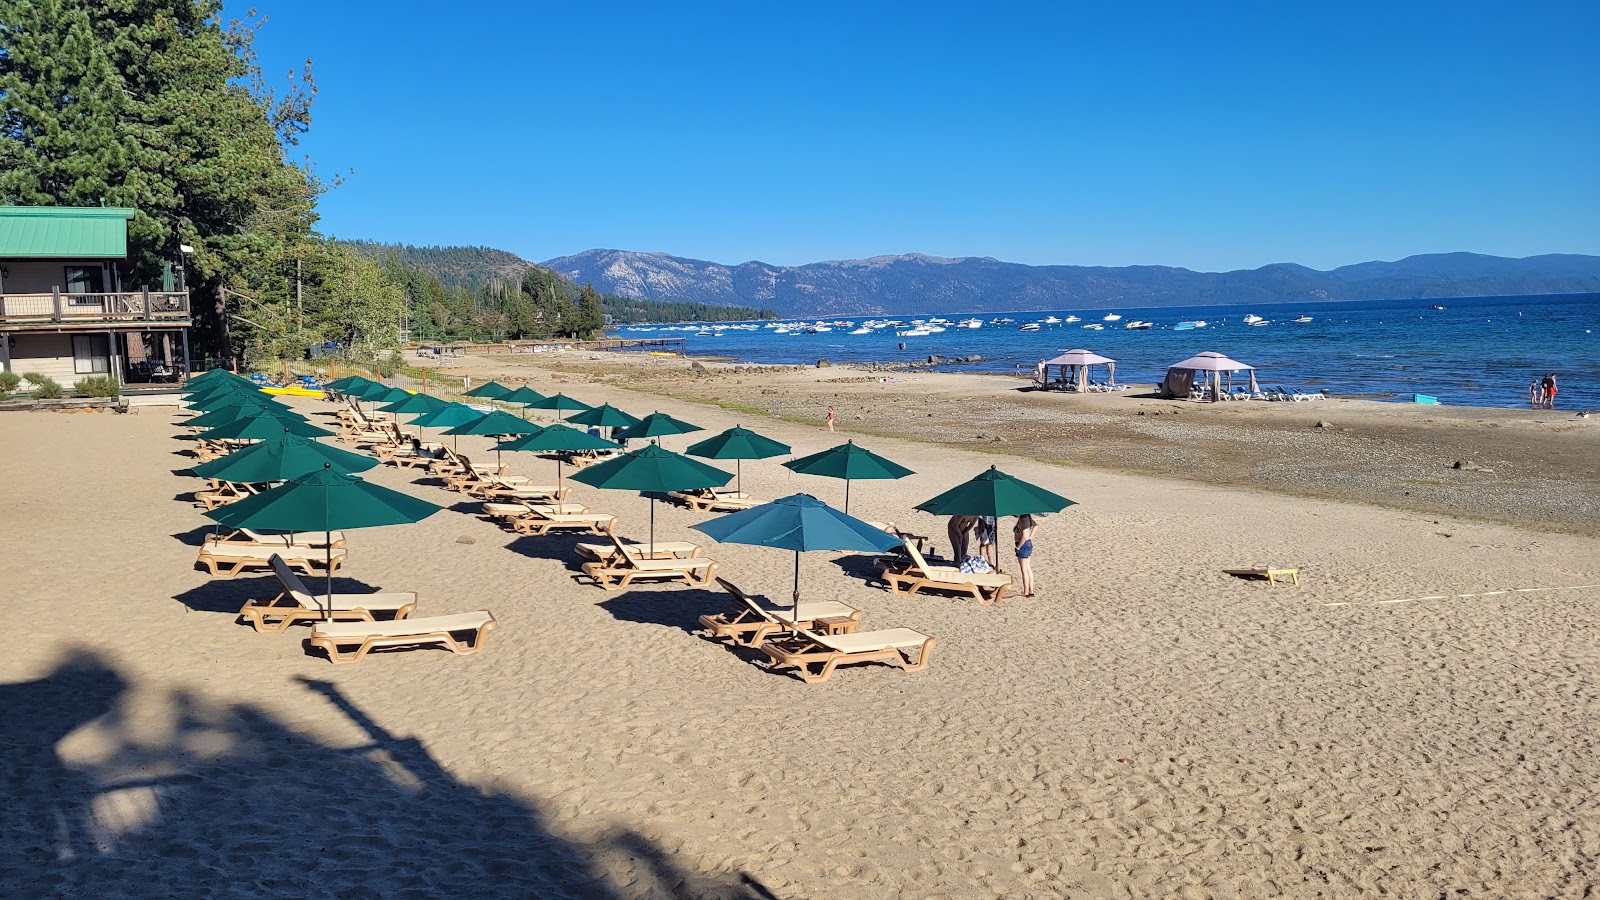 Foto de Sandy Beach - lugar popular entre os apreciadores de relaxamento